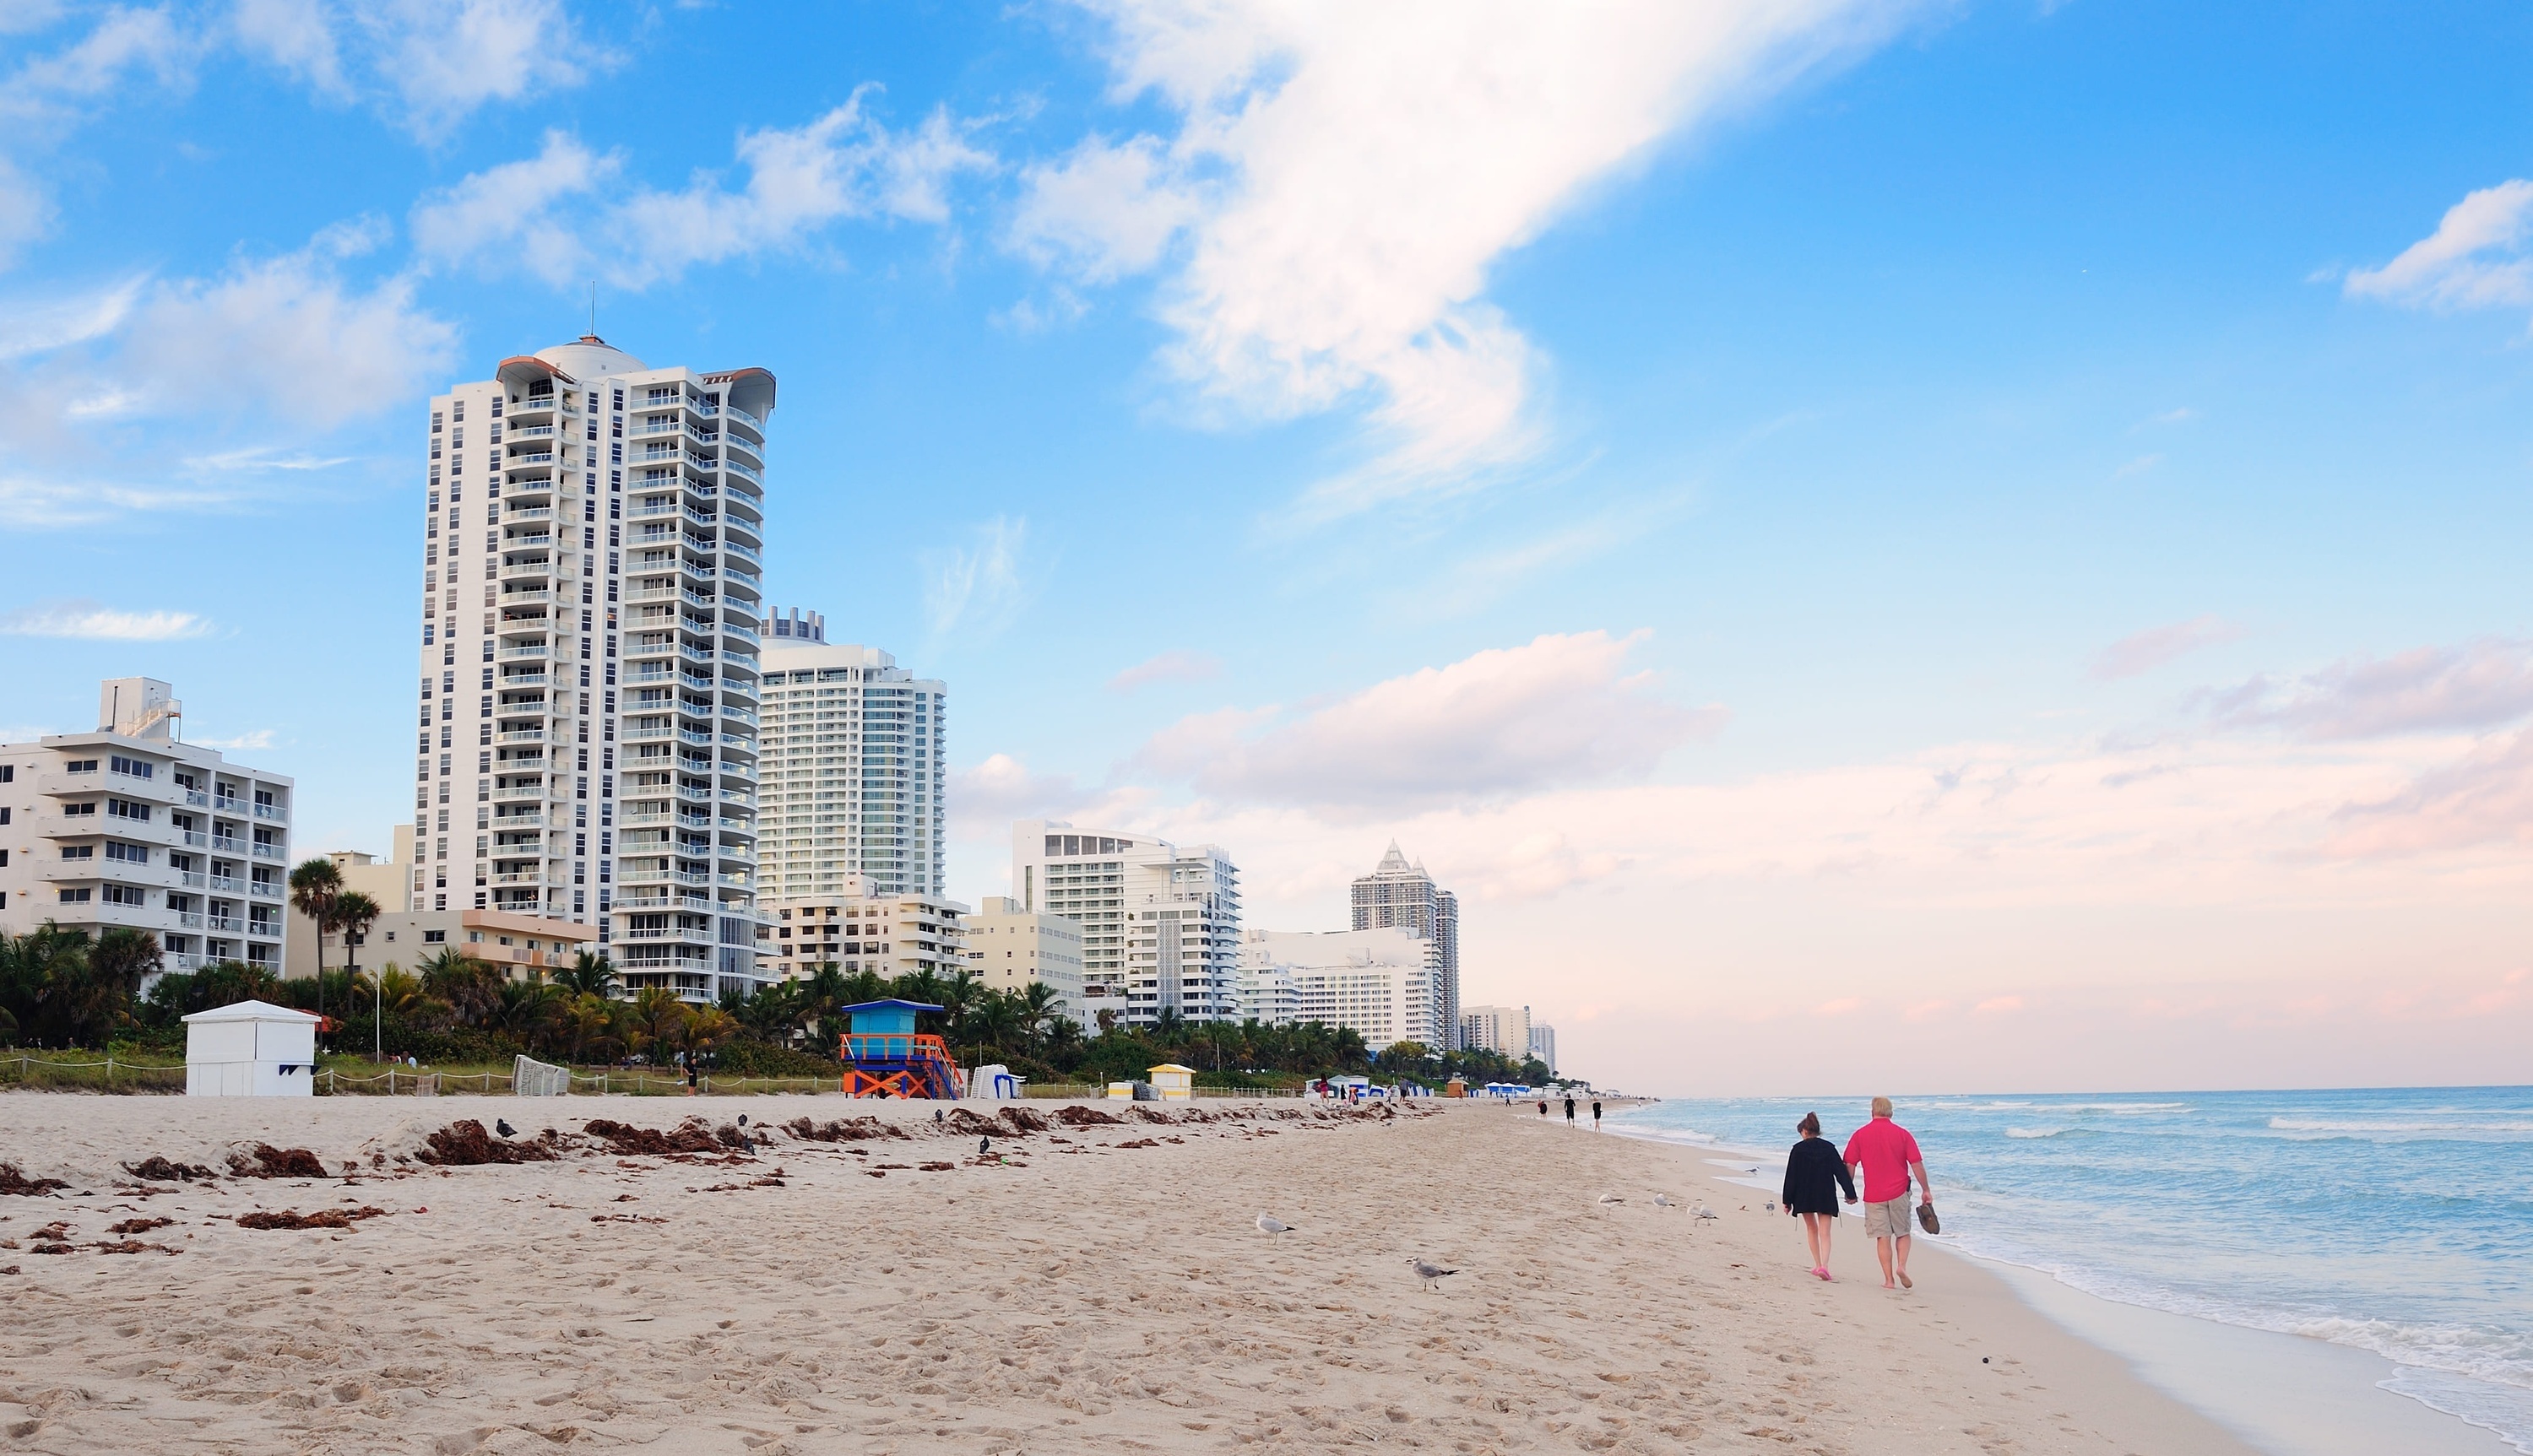 The best beaches in Miami